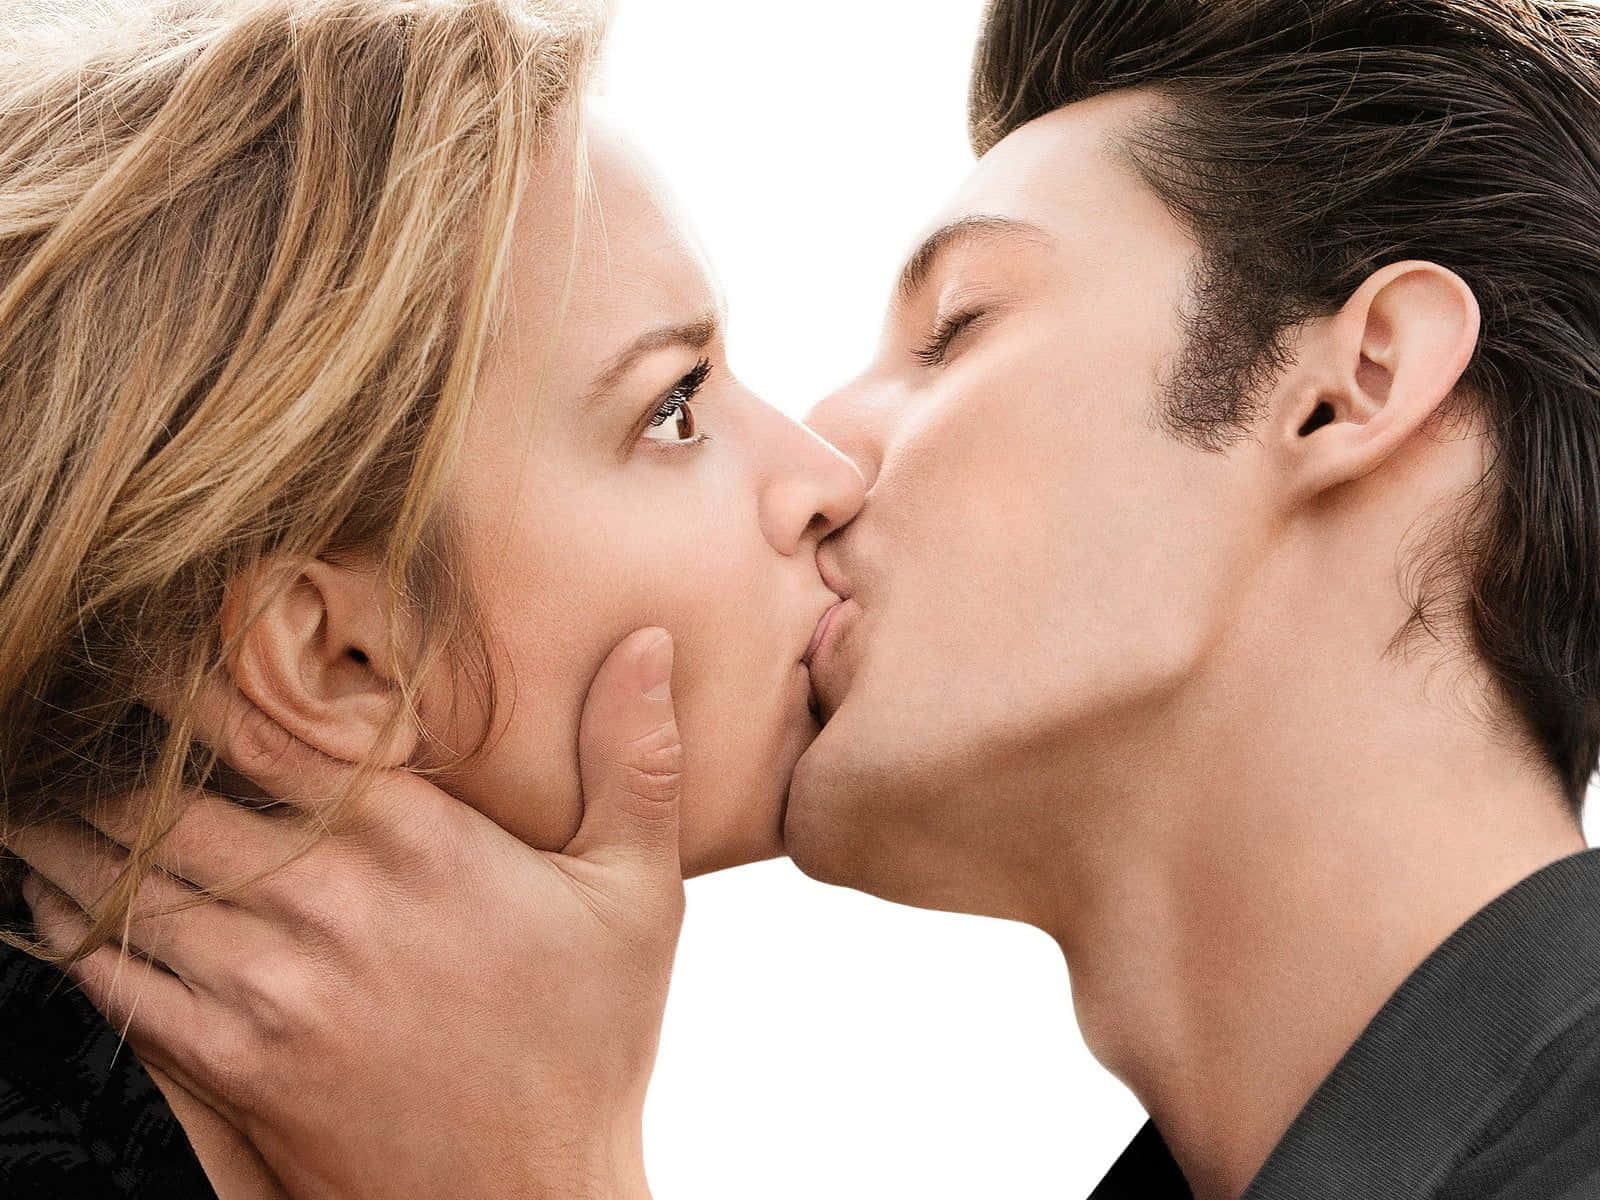 Целую программ. Комедия: «Притворись моим парнем» (2012, Франция). Поцелуй. Легкий поцелуй. Красивый французский поцелуй.